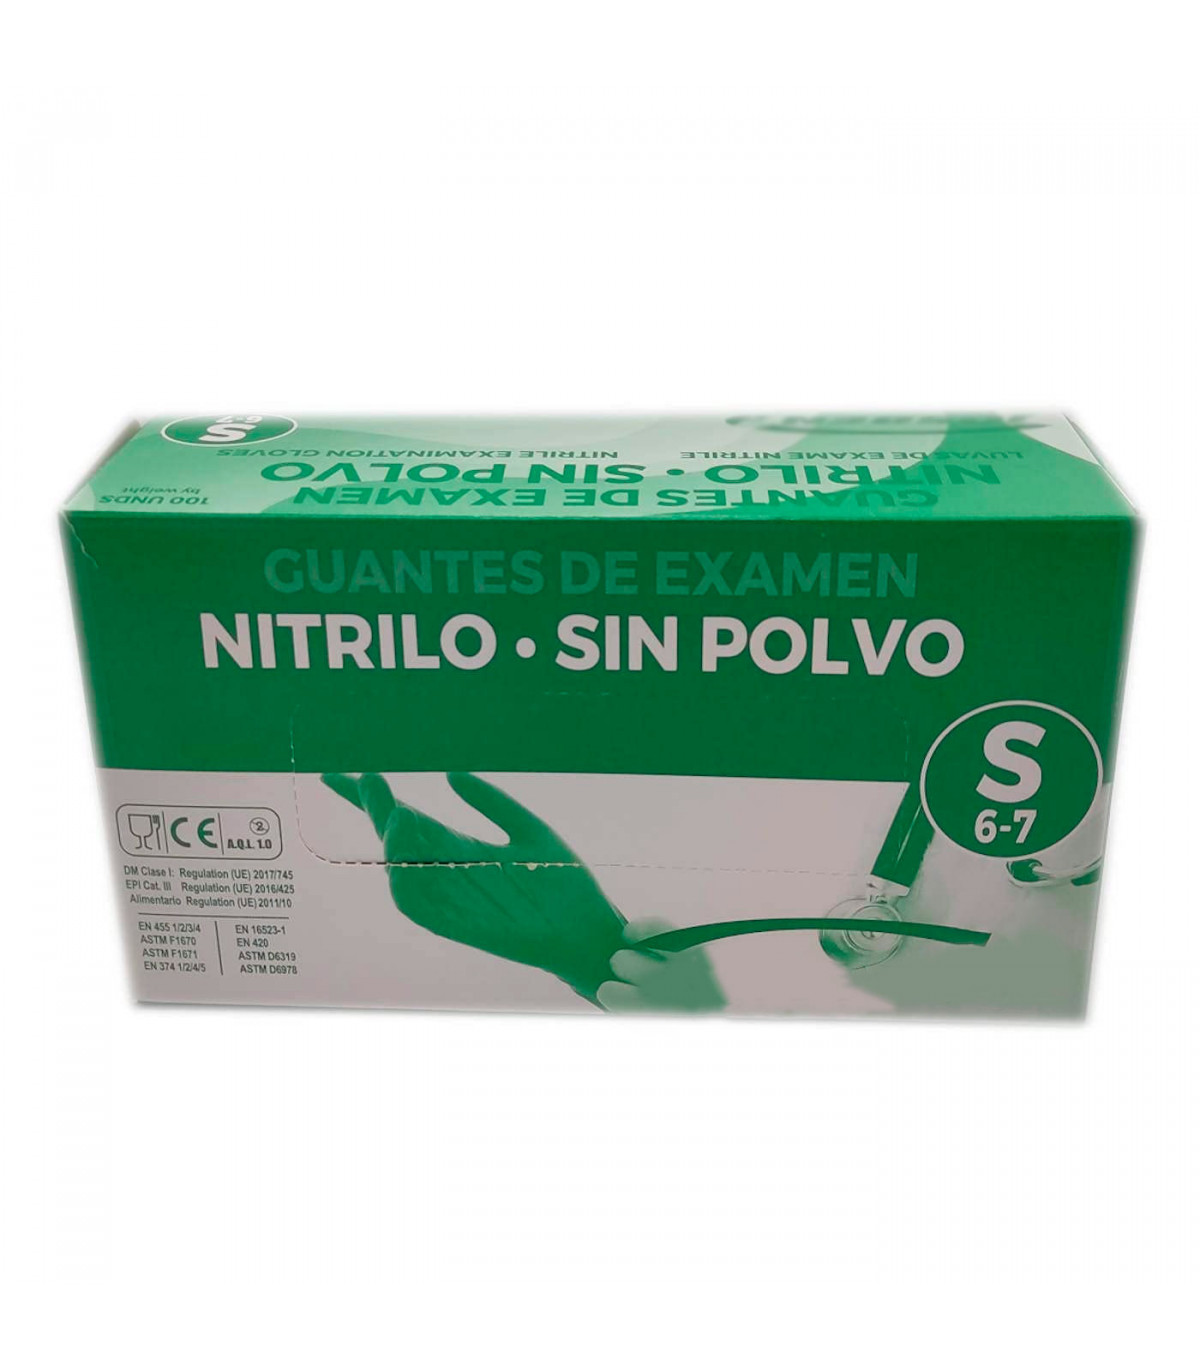 Guantes de Nitrilo sin polvo para uso alimentario Talla S